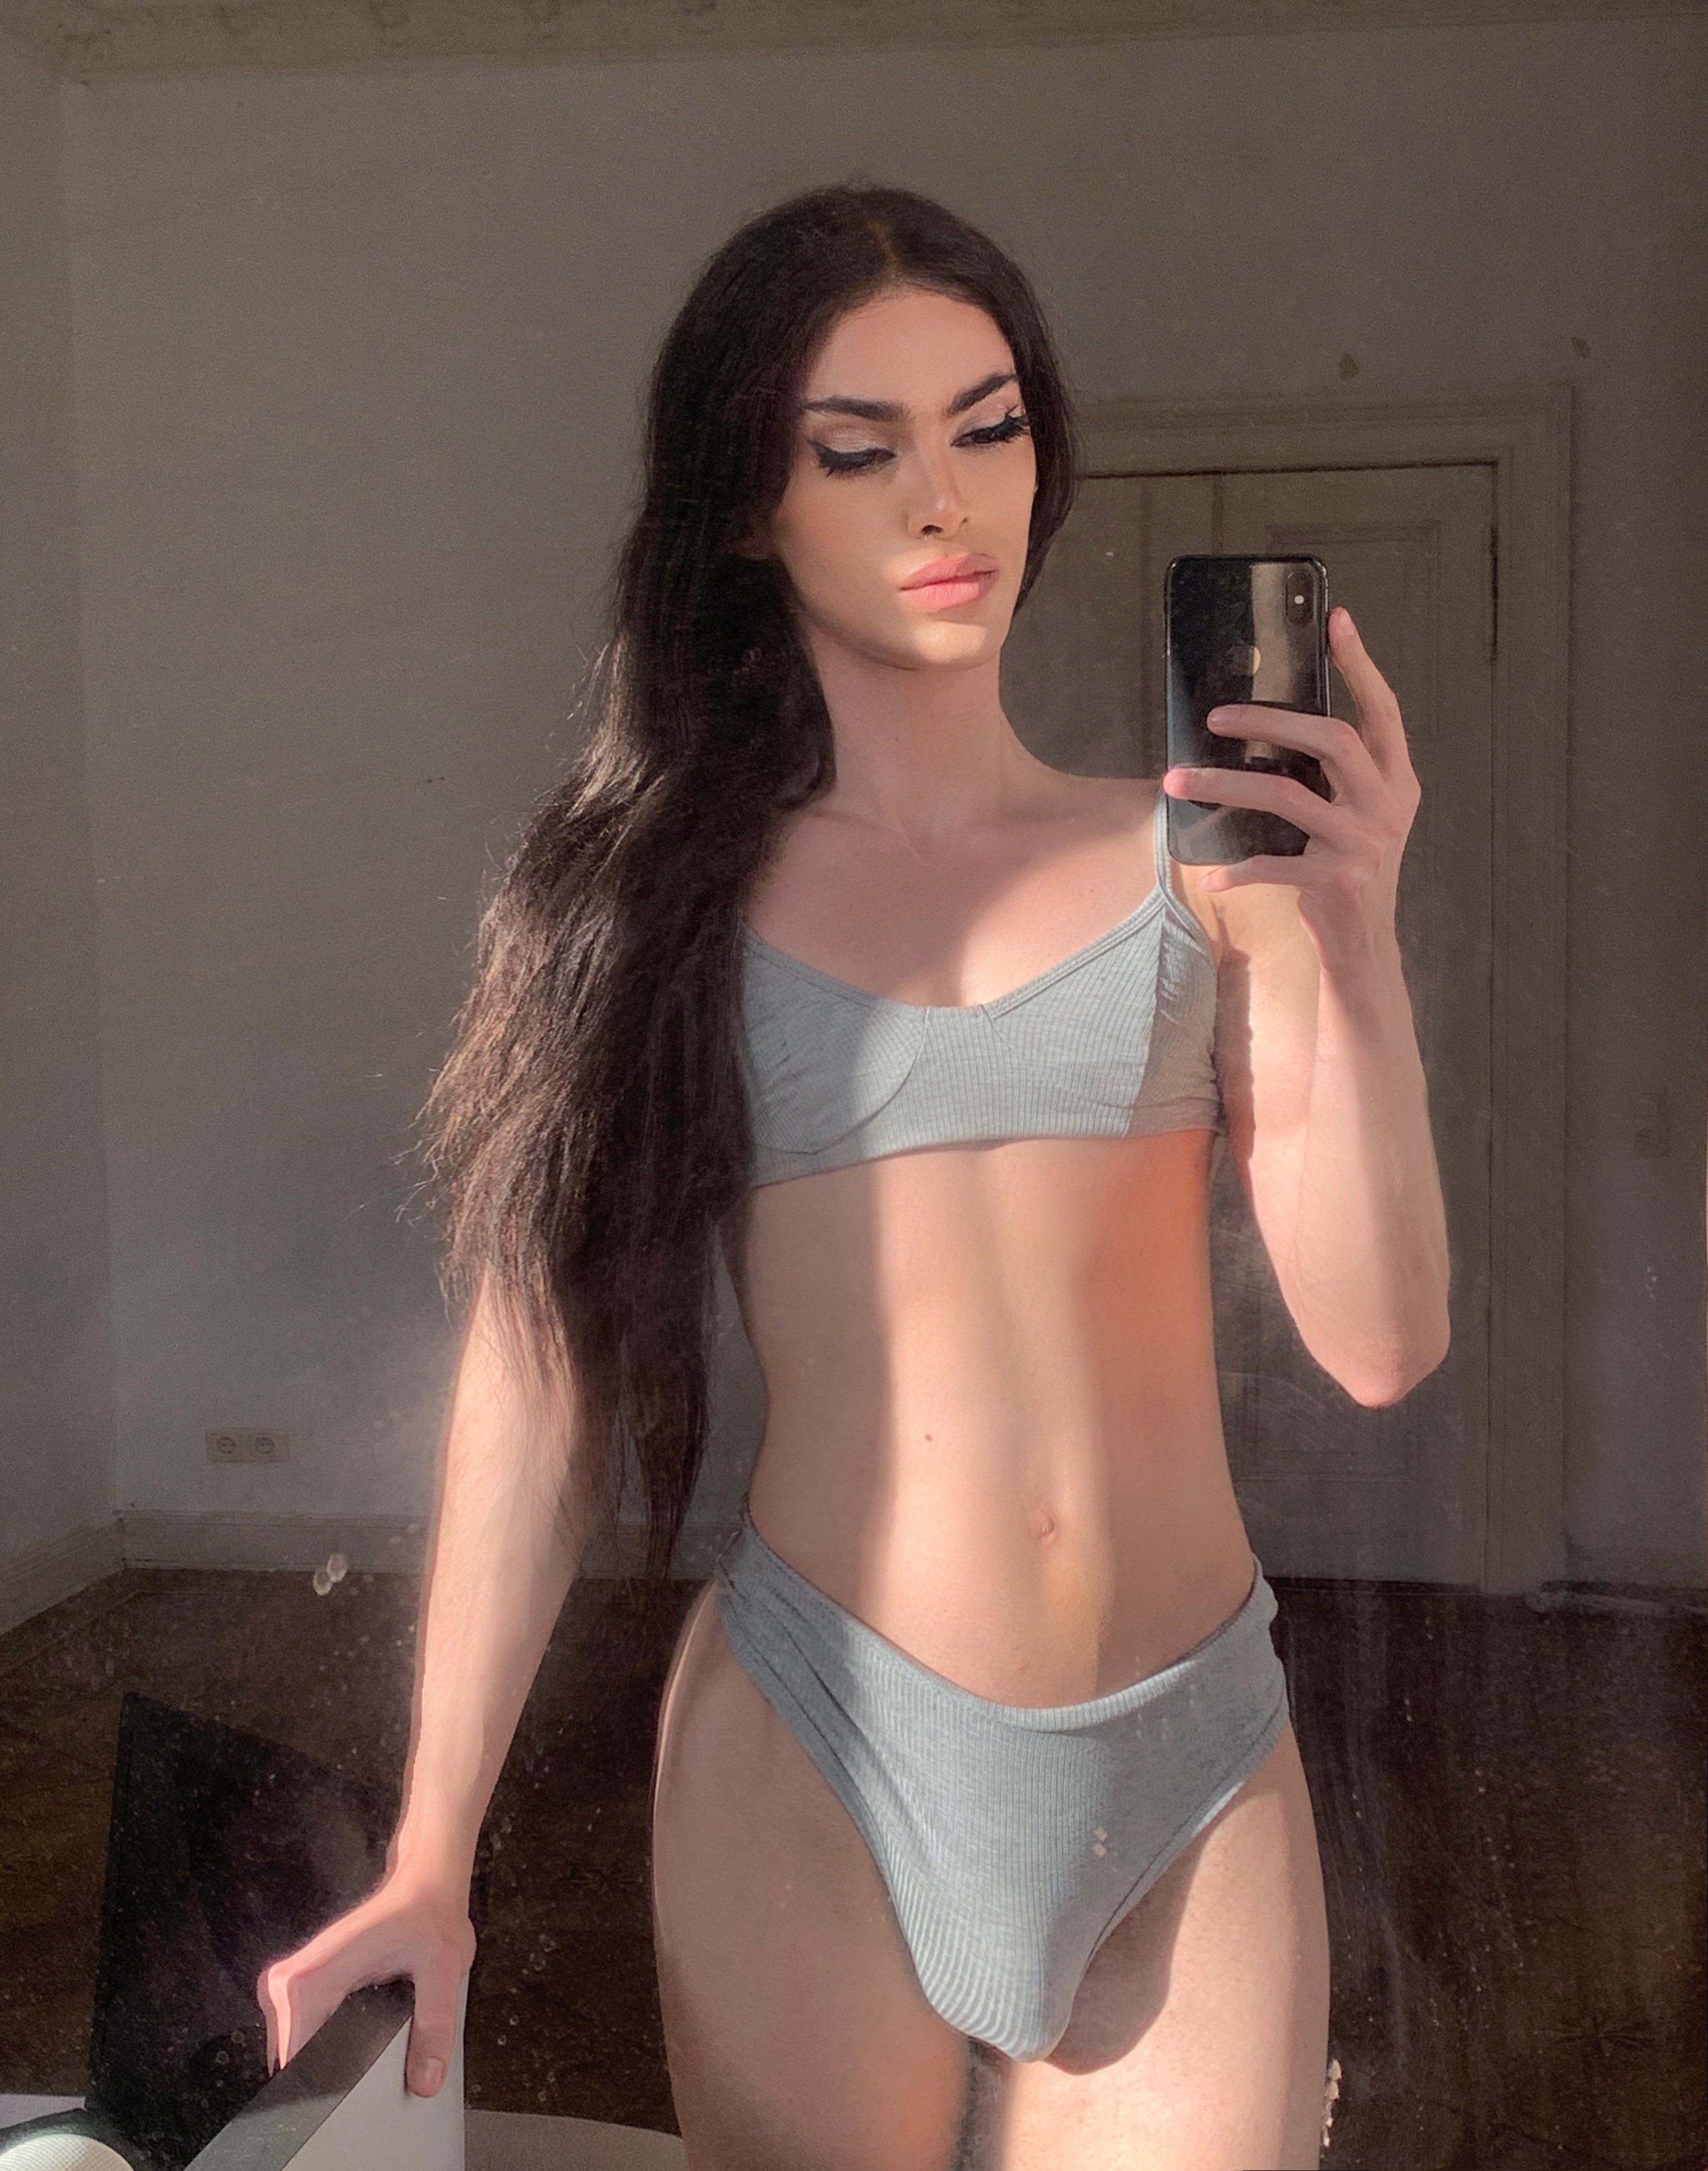 Undress me 😉 z3jvqu - transexual woman